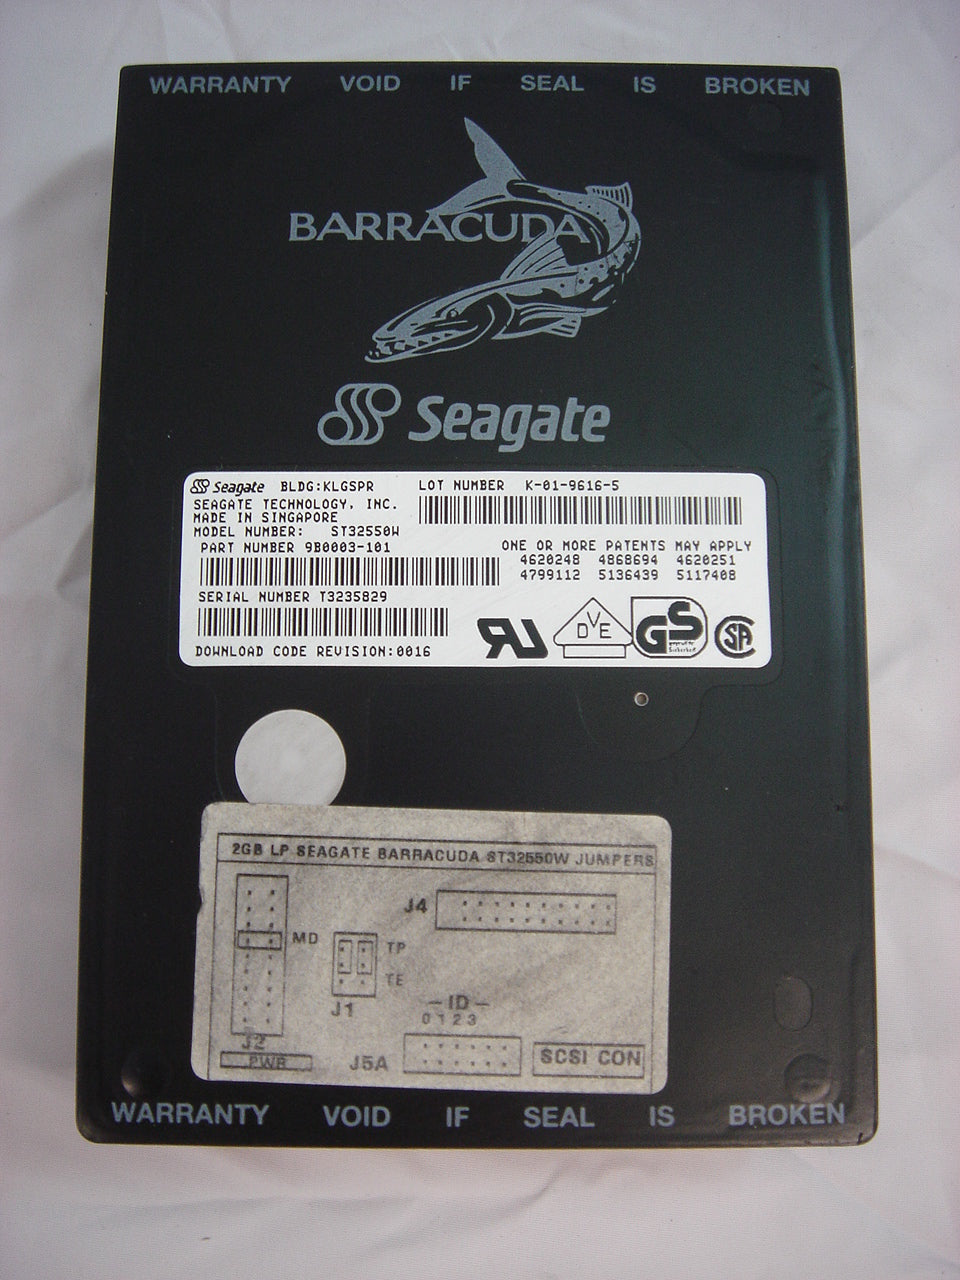 MC5512_9B0003-101_Seagate 2.1Gb SCSI 68 Pin 7200rpm 3.5in HDD - Image2